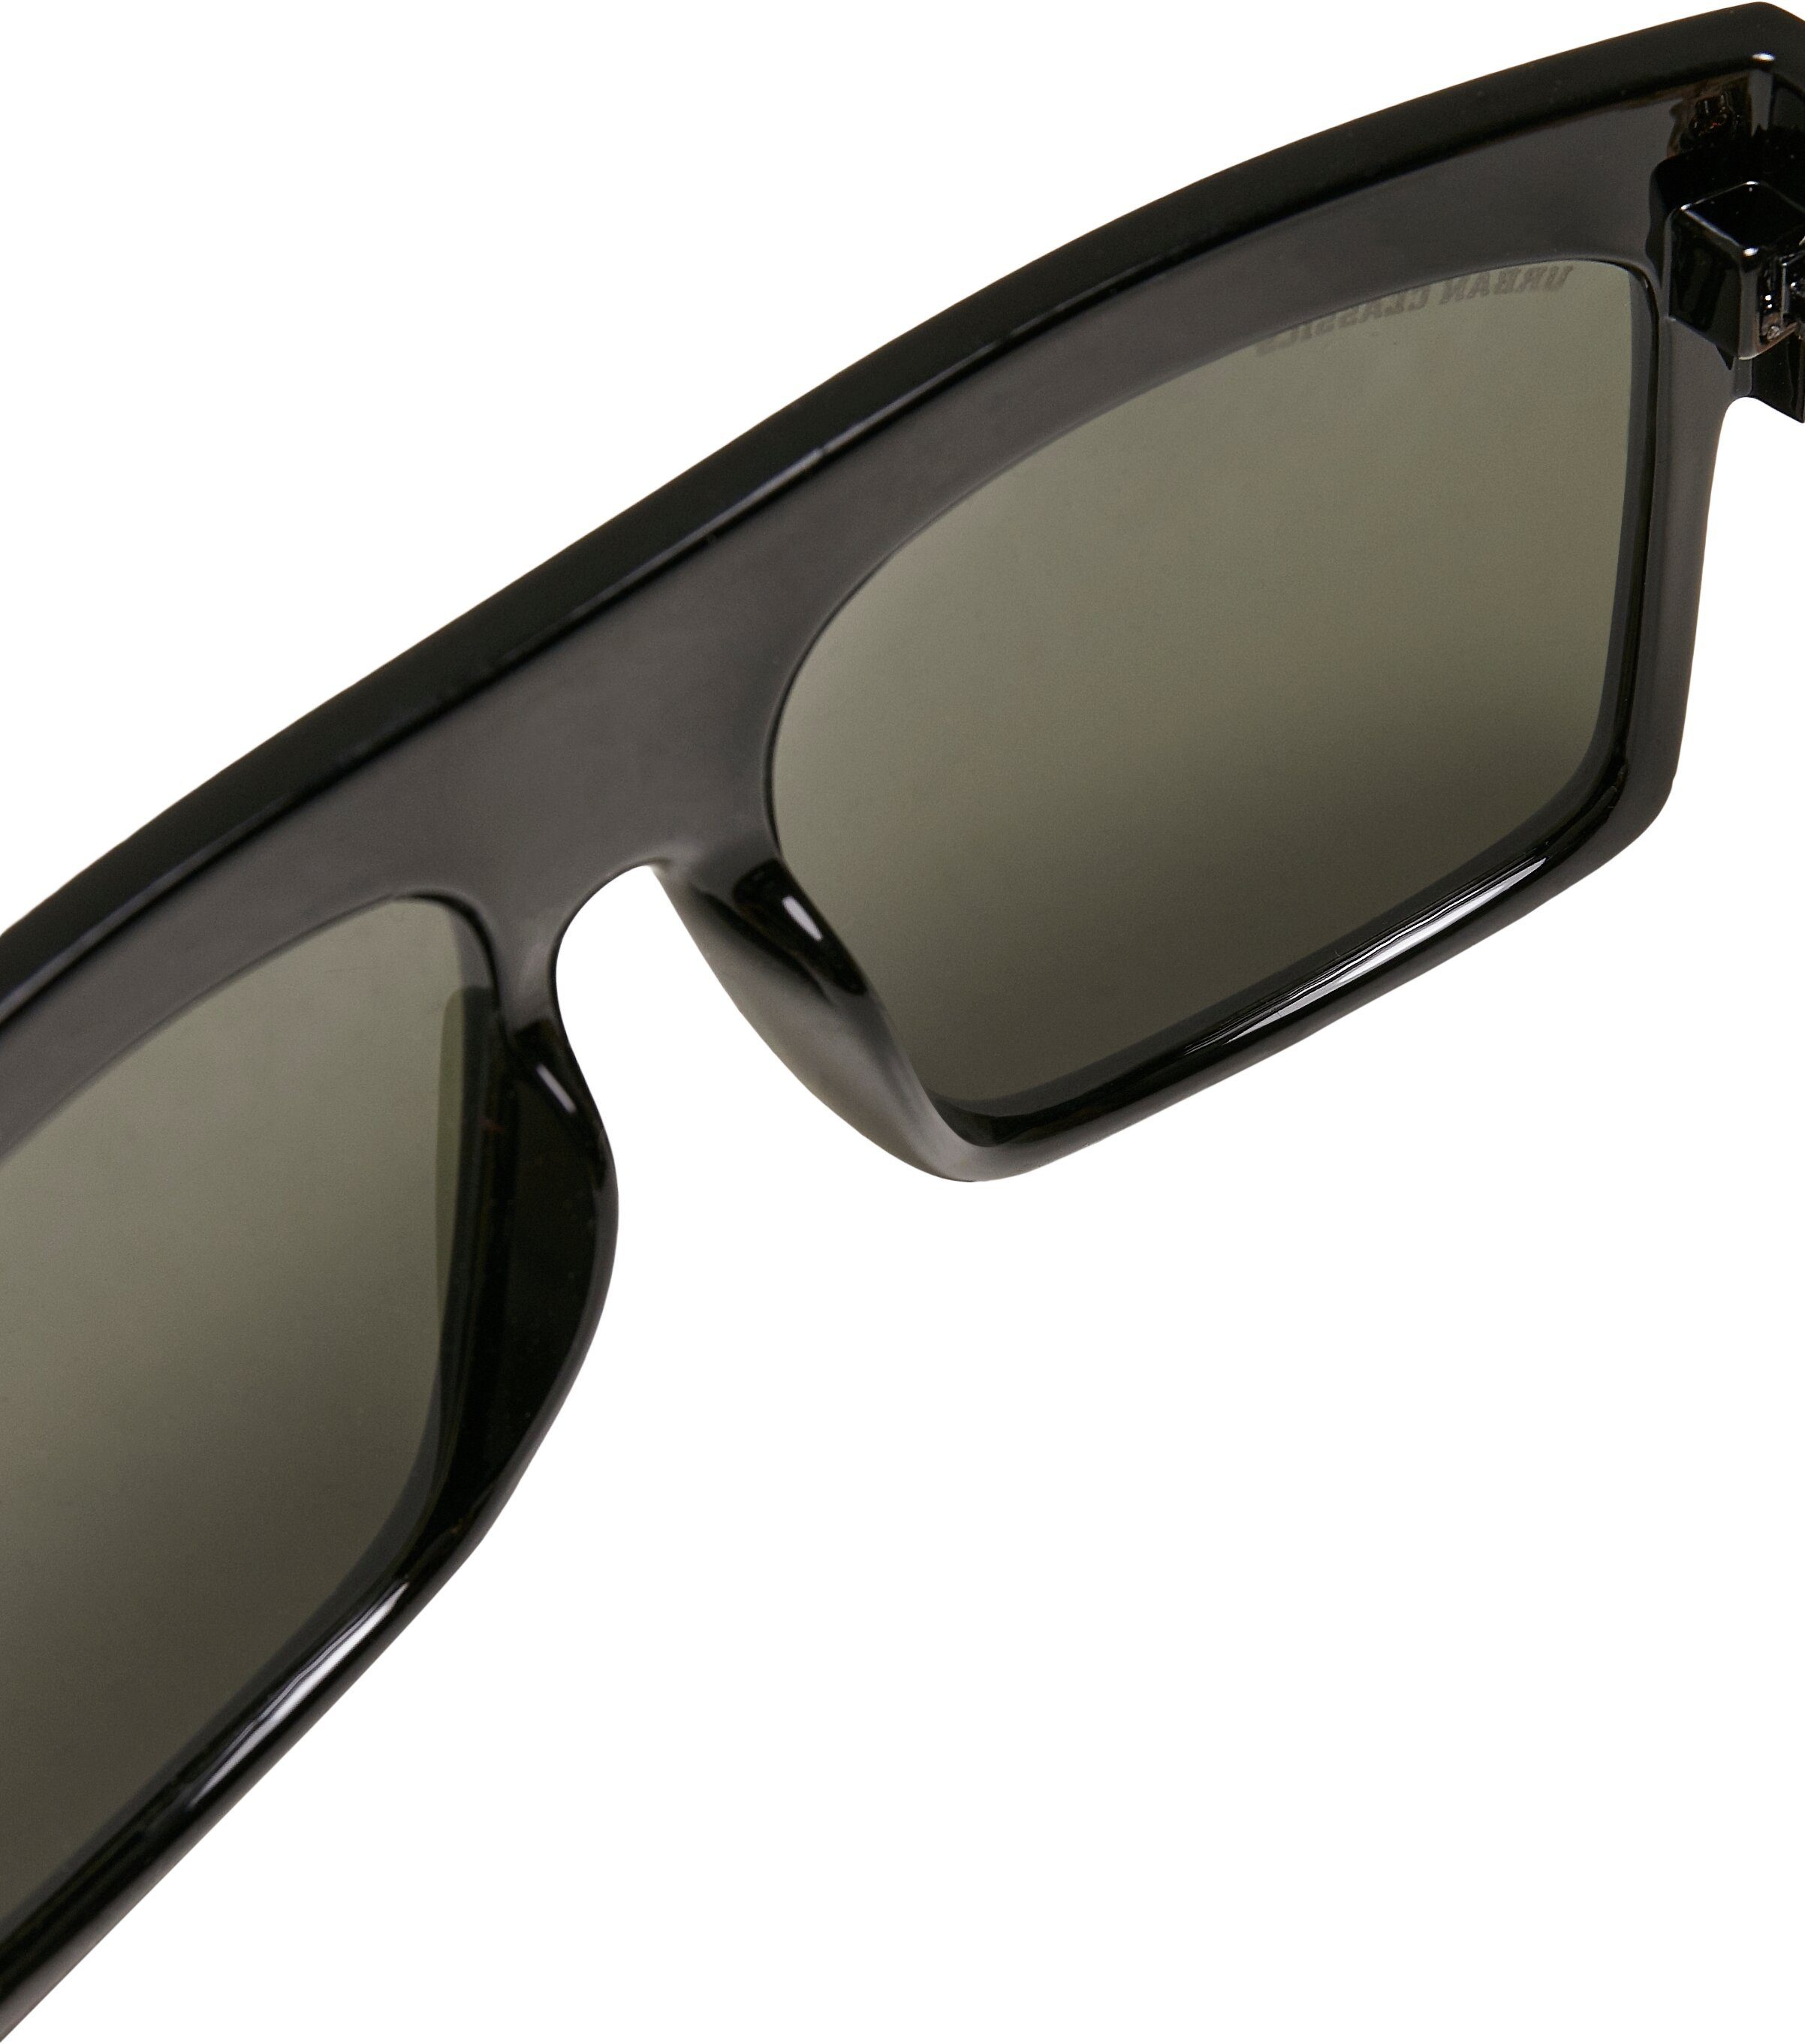 Accessoires Zakynthos black/gold with CLASSICS Chain Sonnenbrille URBAN Sunglasses